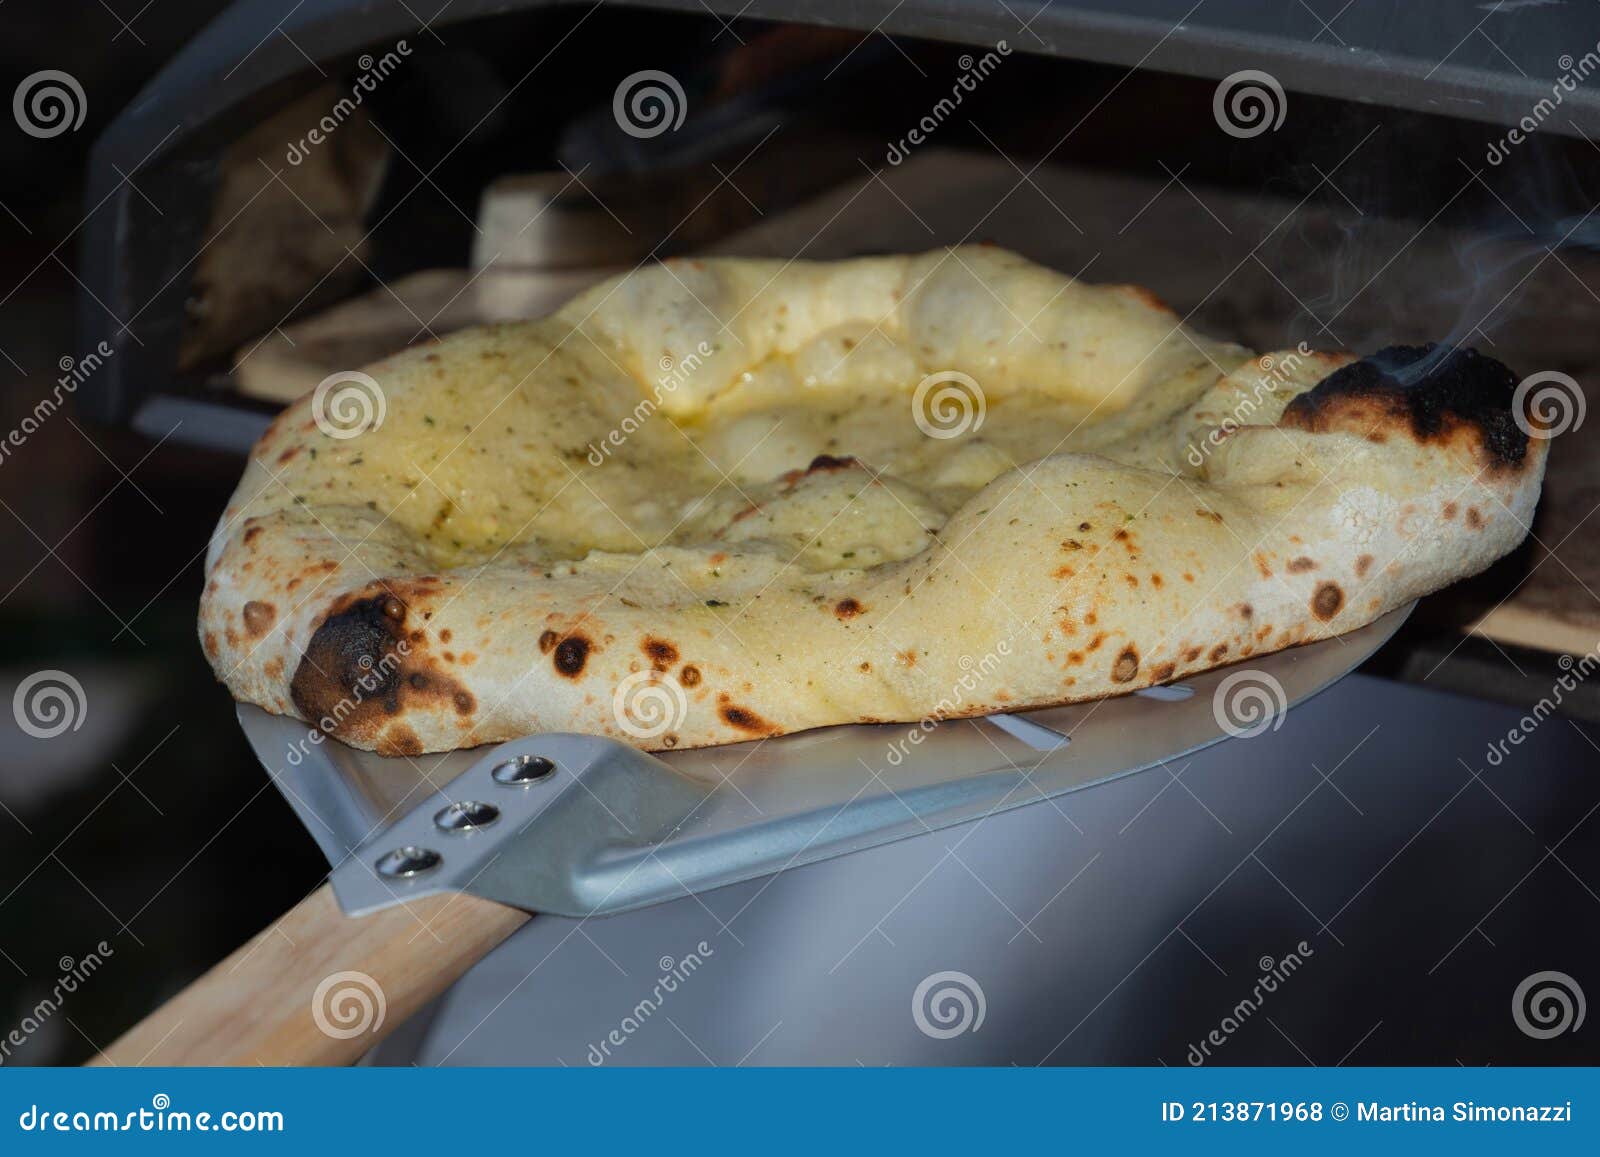 хлеб как пицца в духовке фото 119